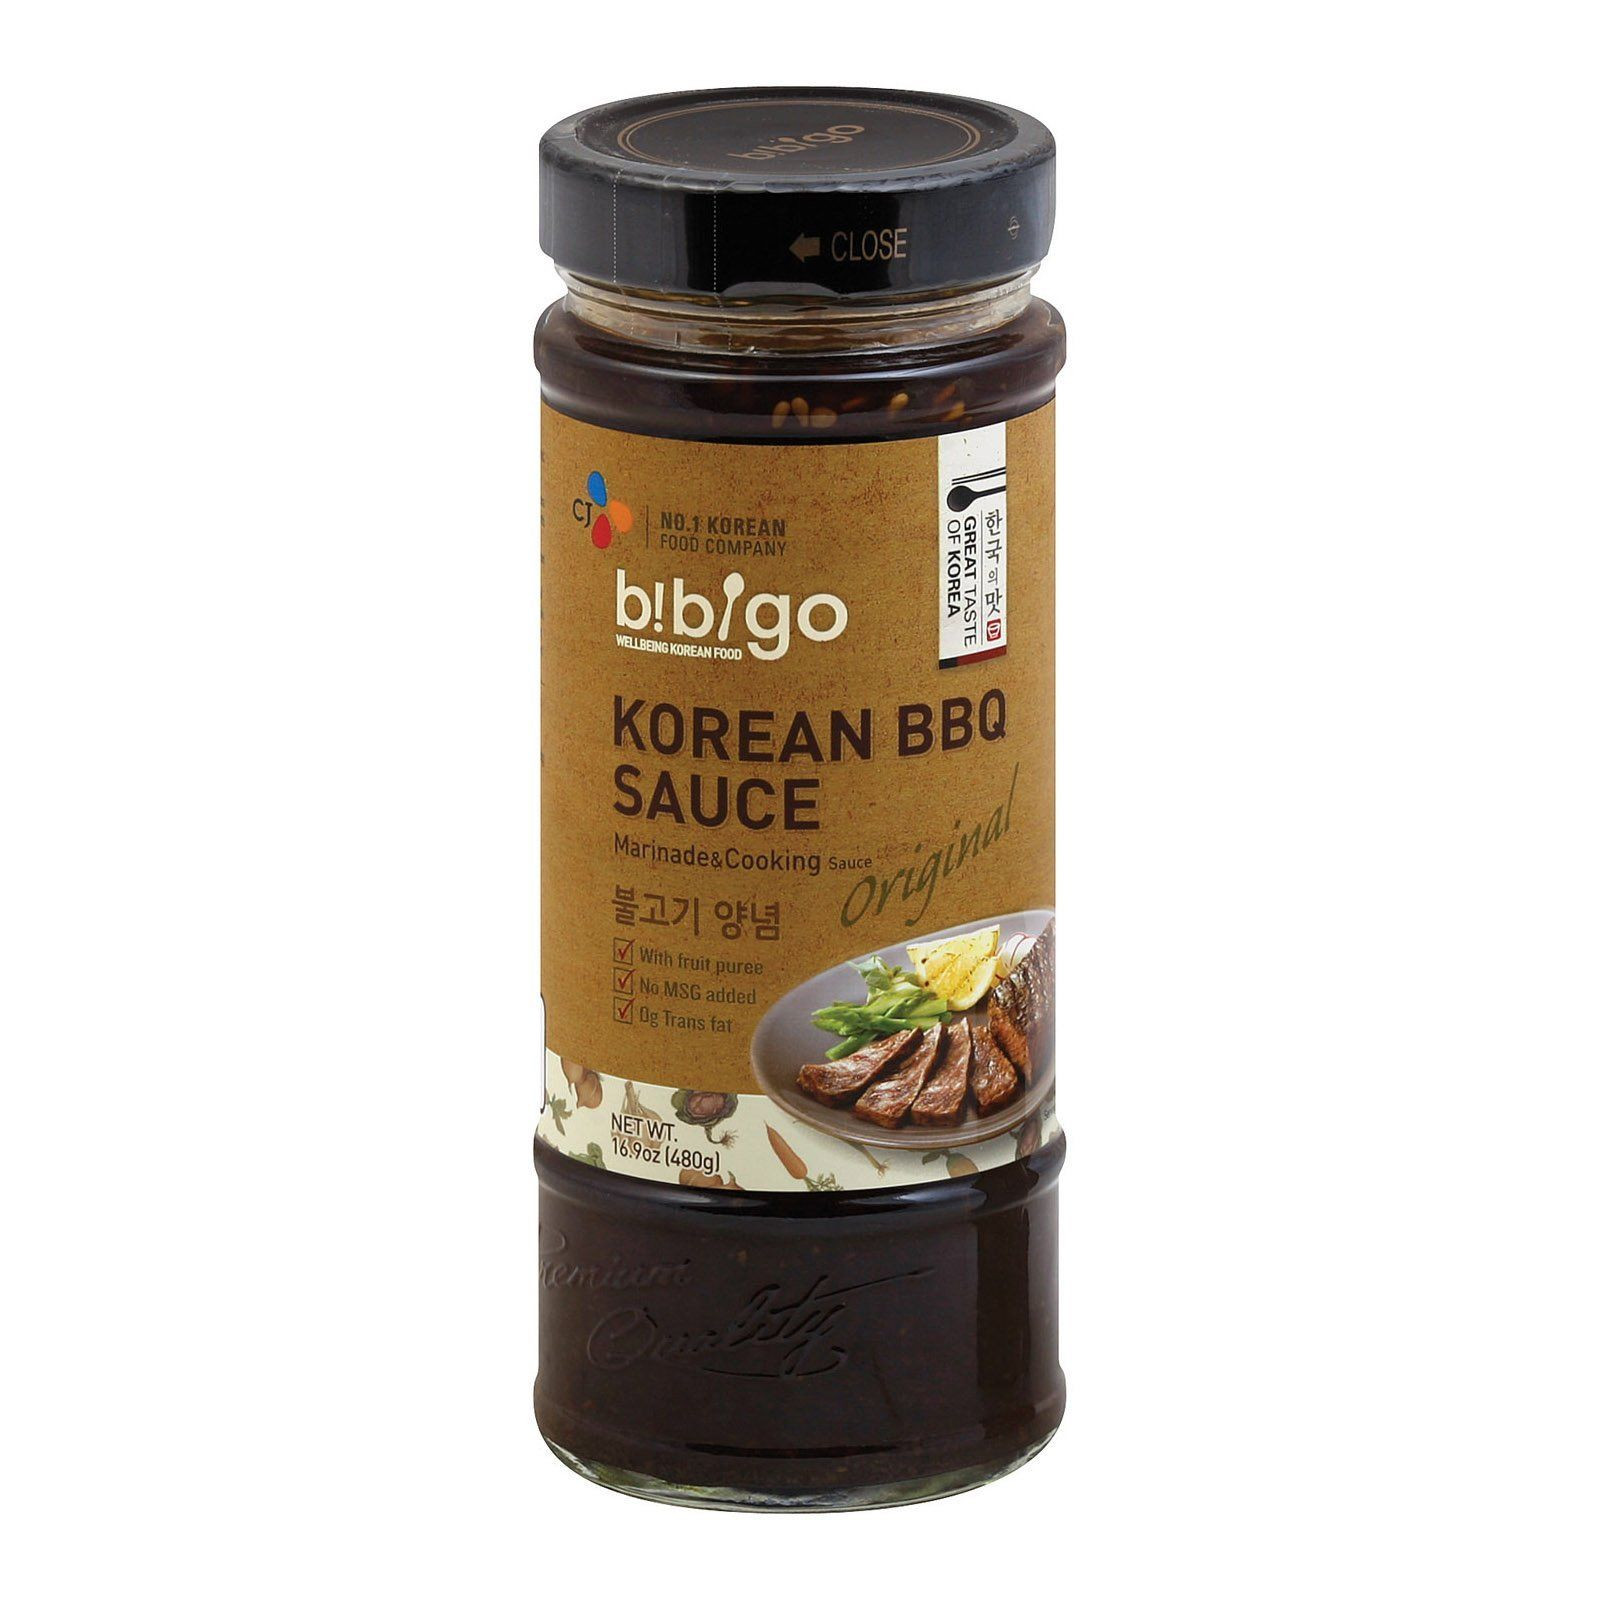 Bibigo Korean Bbq Sauce
 Bibigo Korean Bbq Sauce Original Flavor Case of 6 16